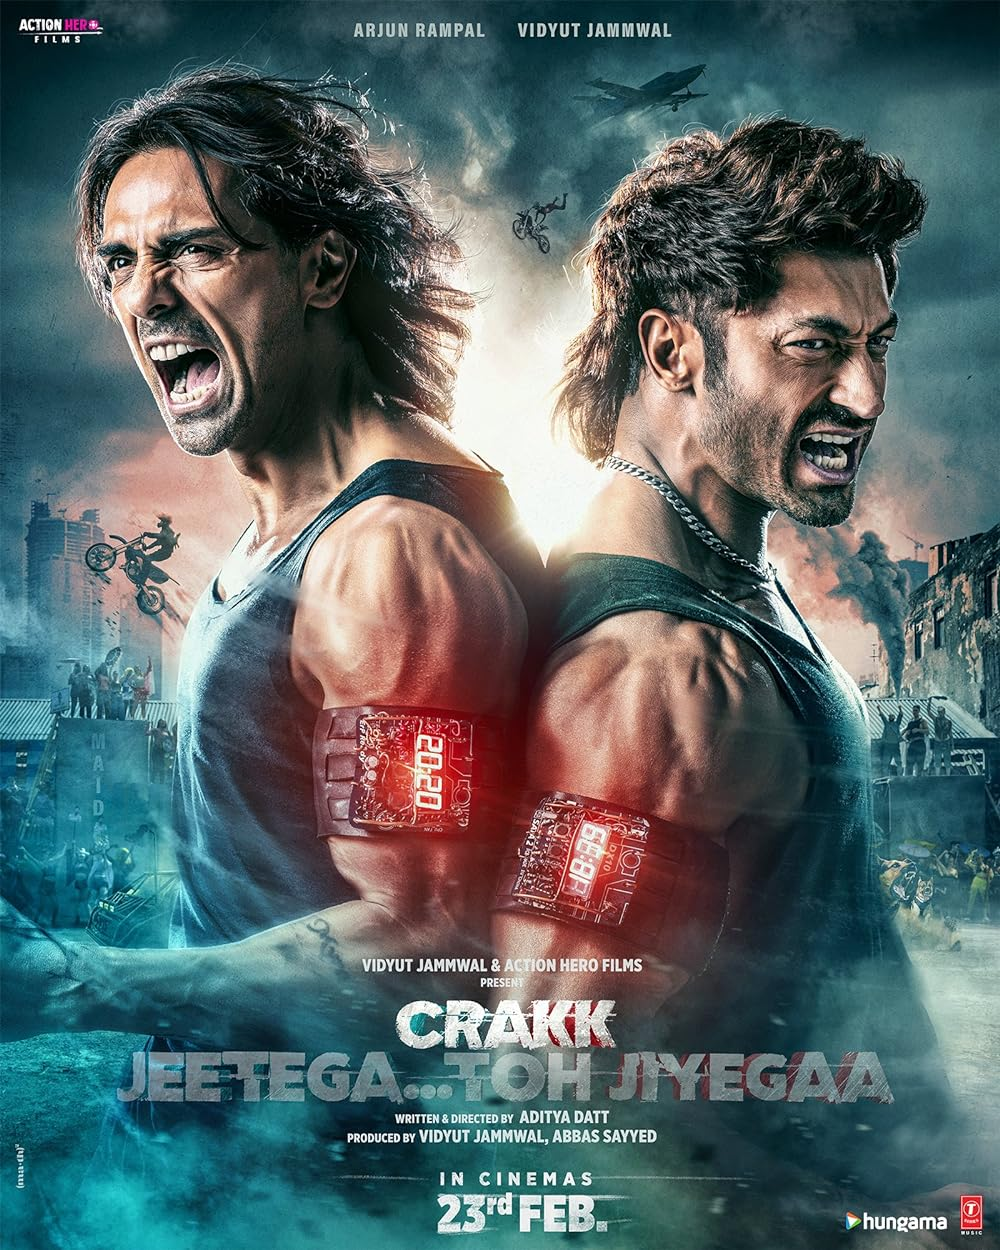 Crakk Hindi Dubbed Full Movie Watch Online